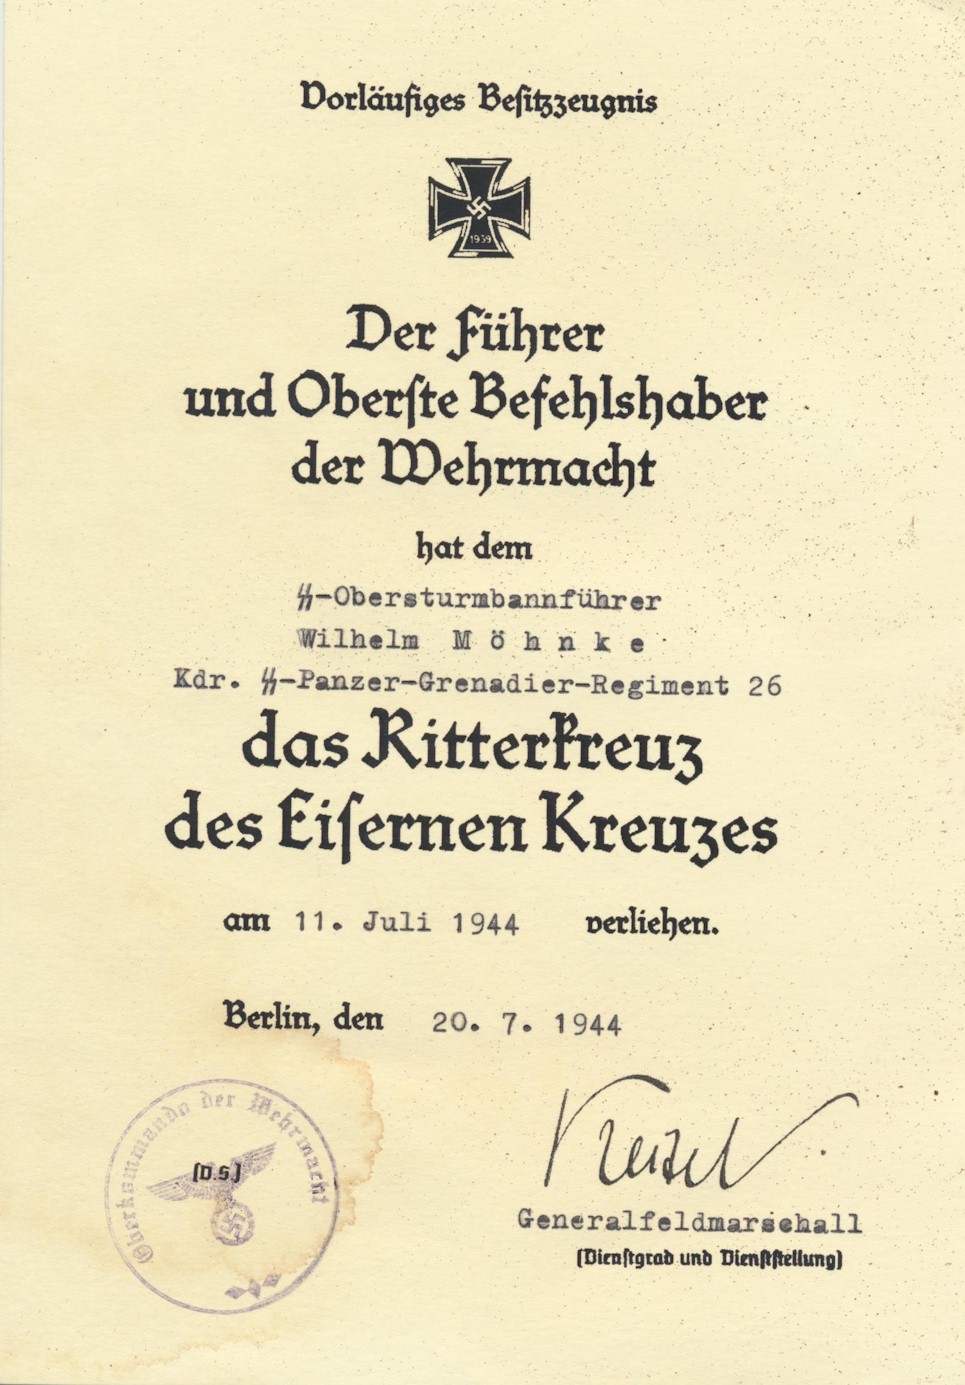 GERMAN AWARD DOCUMENT KNIGHT CROSS WITH OAK LEAVES, 1939 - WILHELM MOHNKE